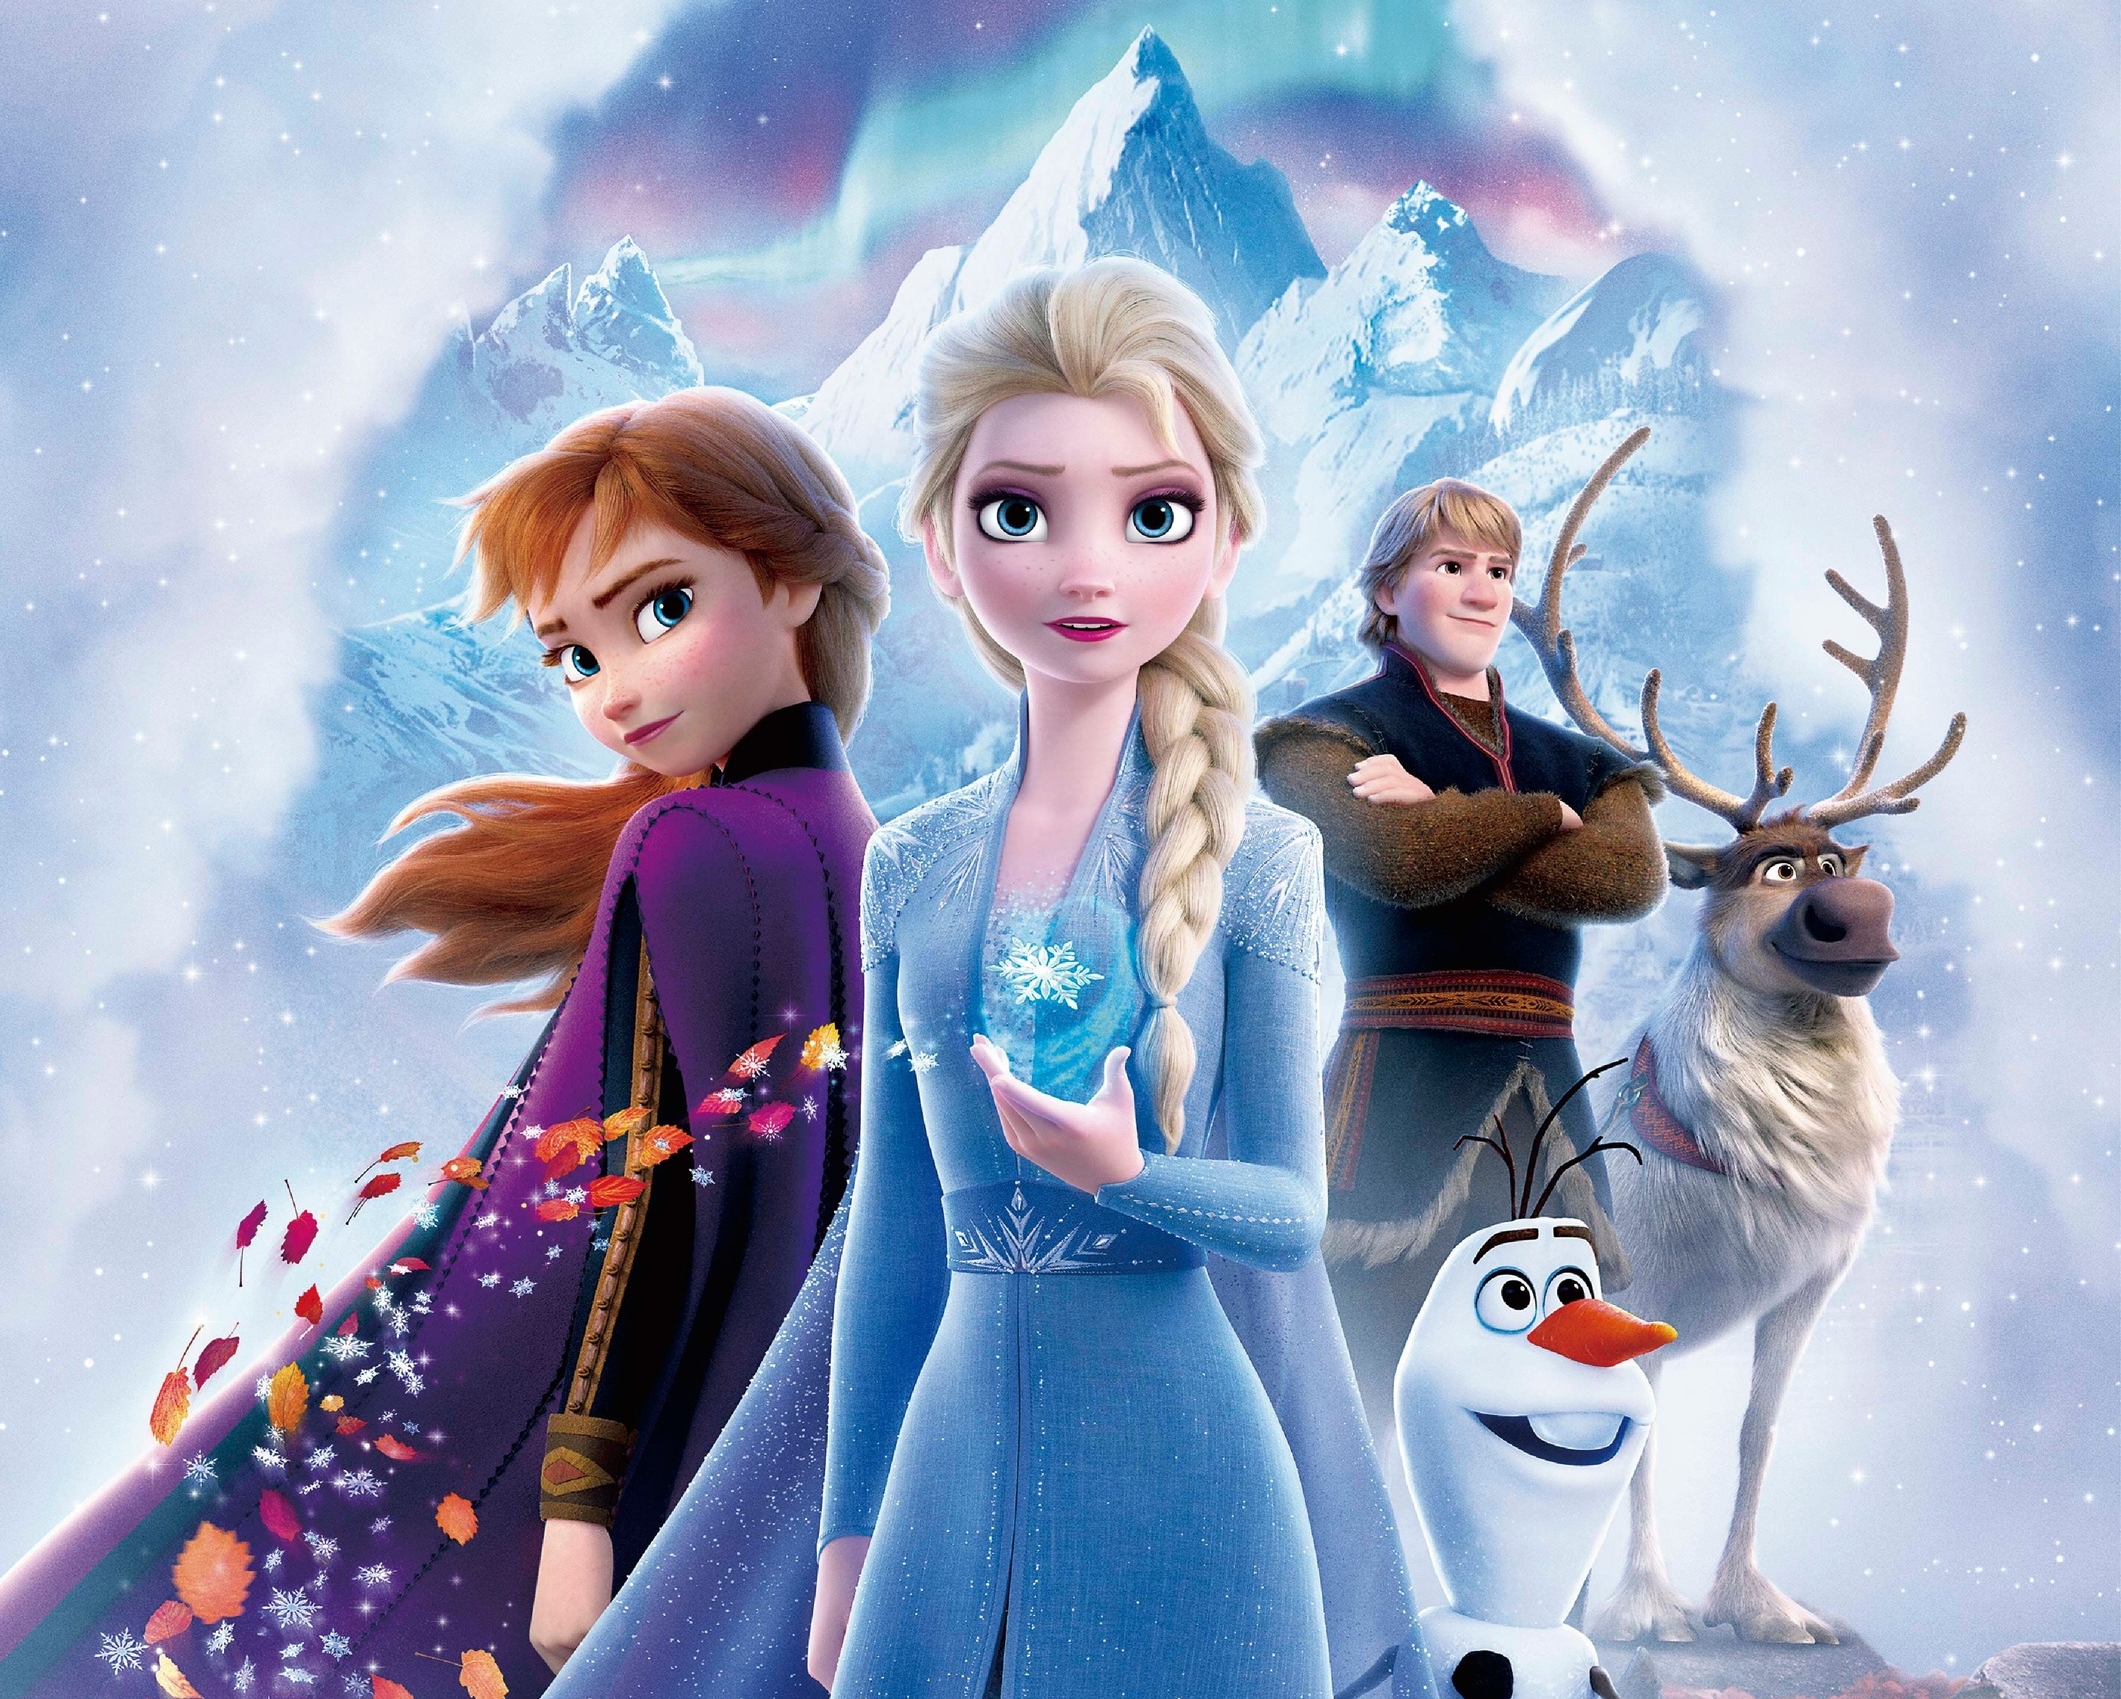 Anna Frozen Elsa Frozen Frozen 2 Kristoff Frozen Olaf Frozen Sven Frozen 2121x1699